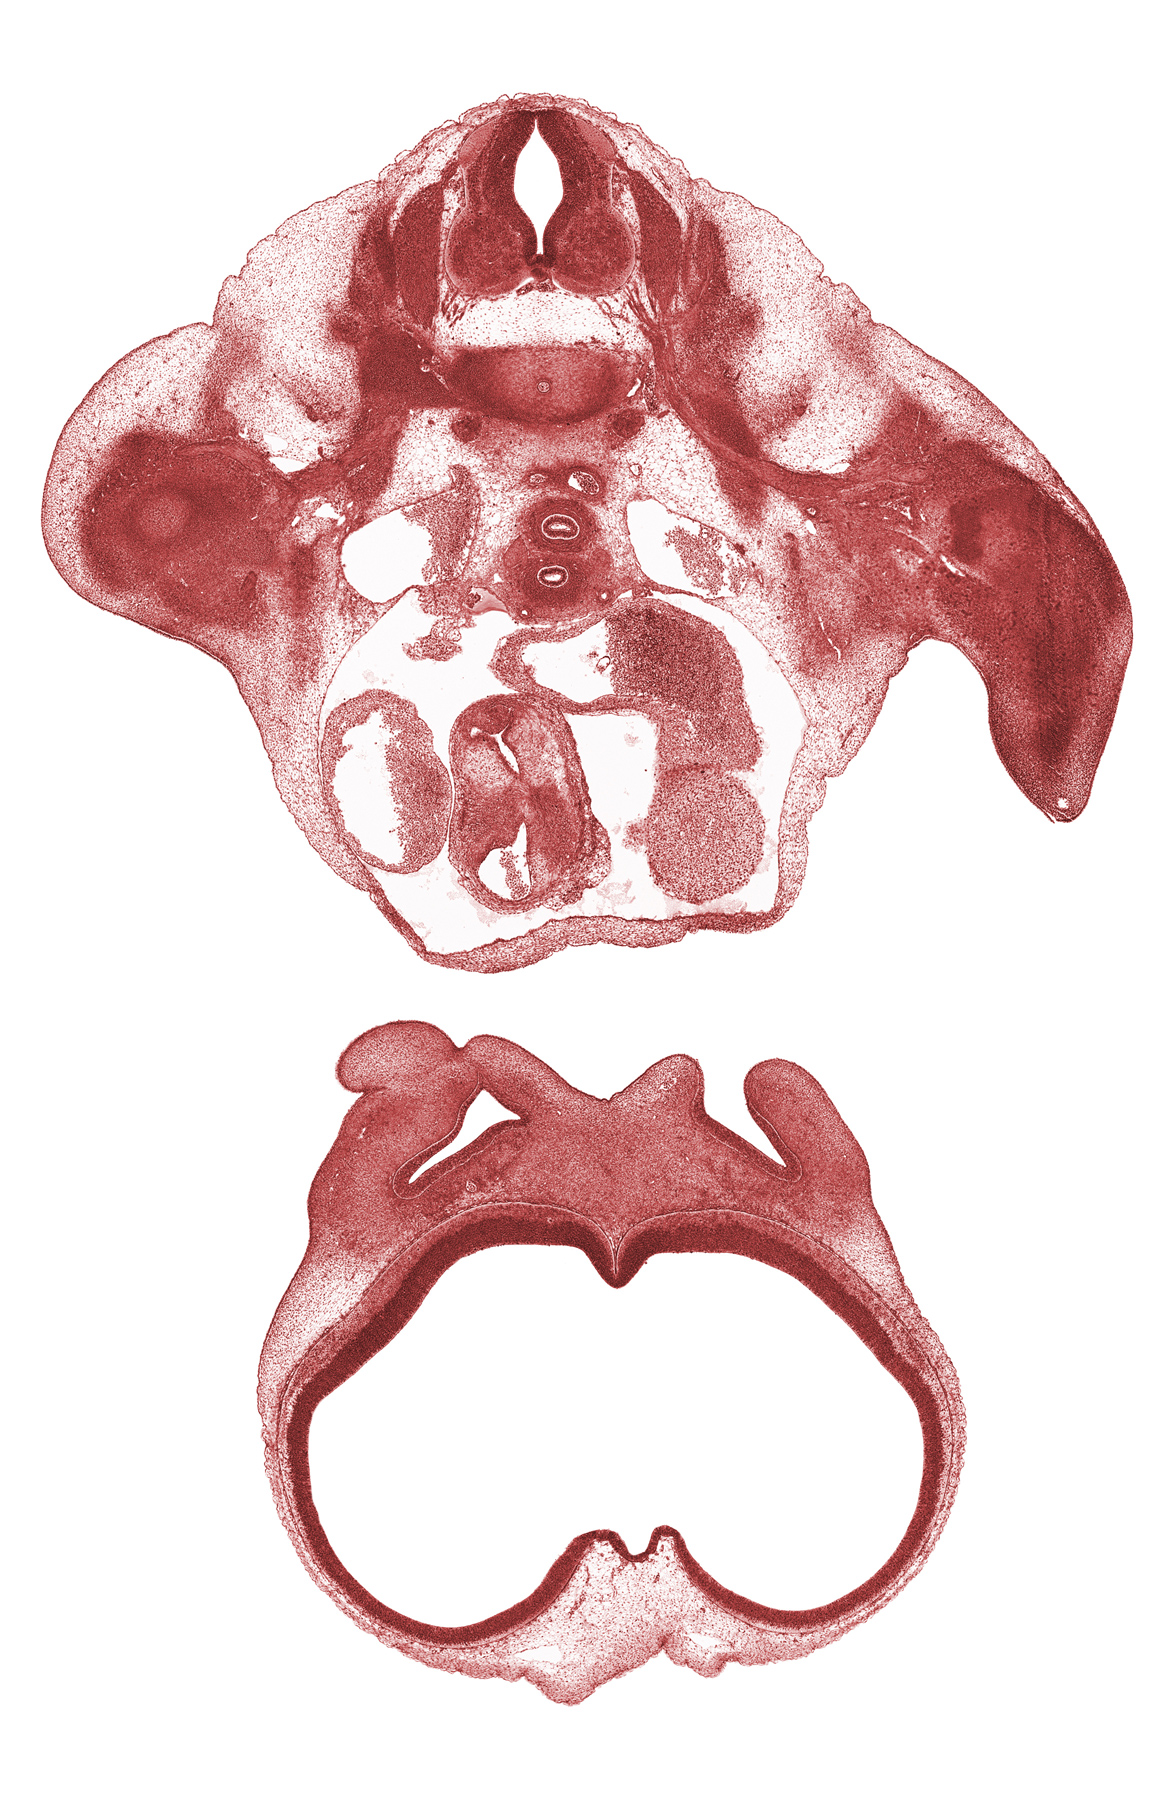 T-1 spinal ganglion, T-1 spinal nerve, aortic semilunar valve, brachial plexus, cornu Ammonis, gyrus dentatus, infundibulum of right ventricle, junction of dorsal aortas, lateral nasal prominence, lateral ventricle, left atrium, left ventricle, maxillary prominence of pharyngeal arch 1, medial nasal prominence(s), naris, right precardinal vein, subclavian artery, telencephalon medium